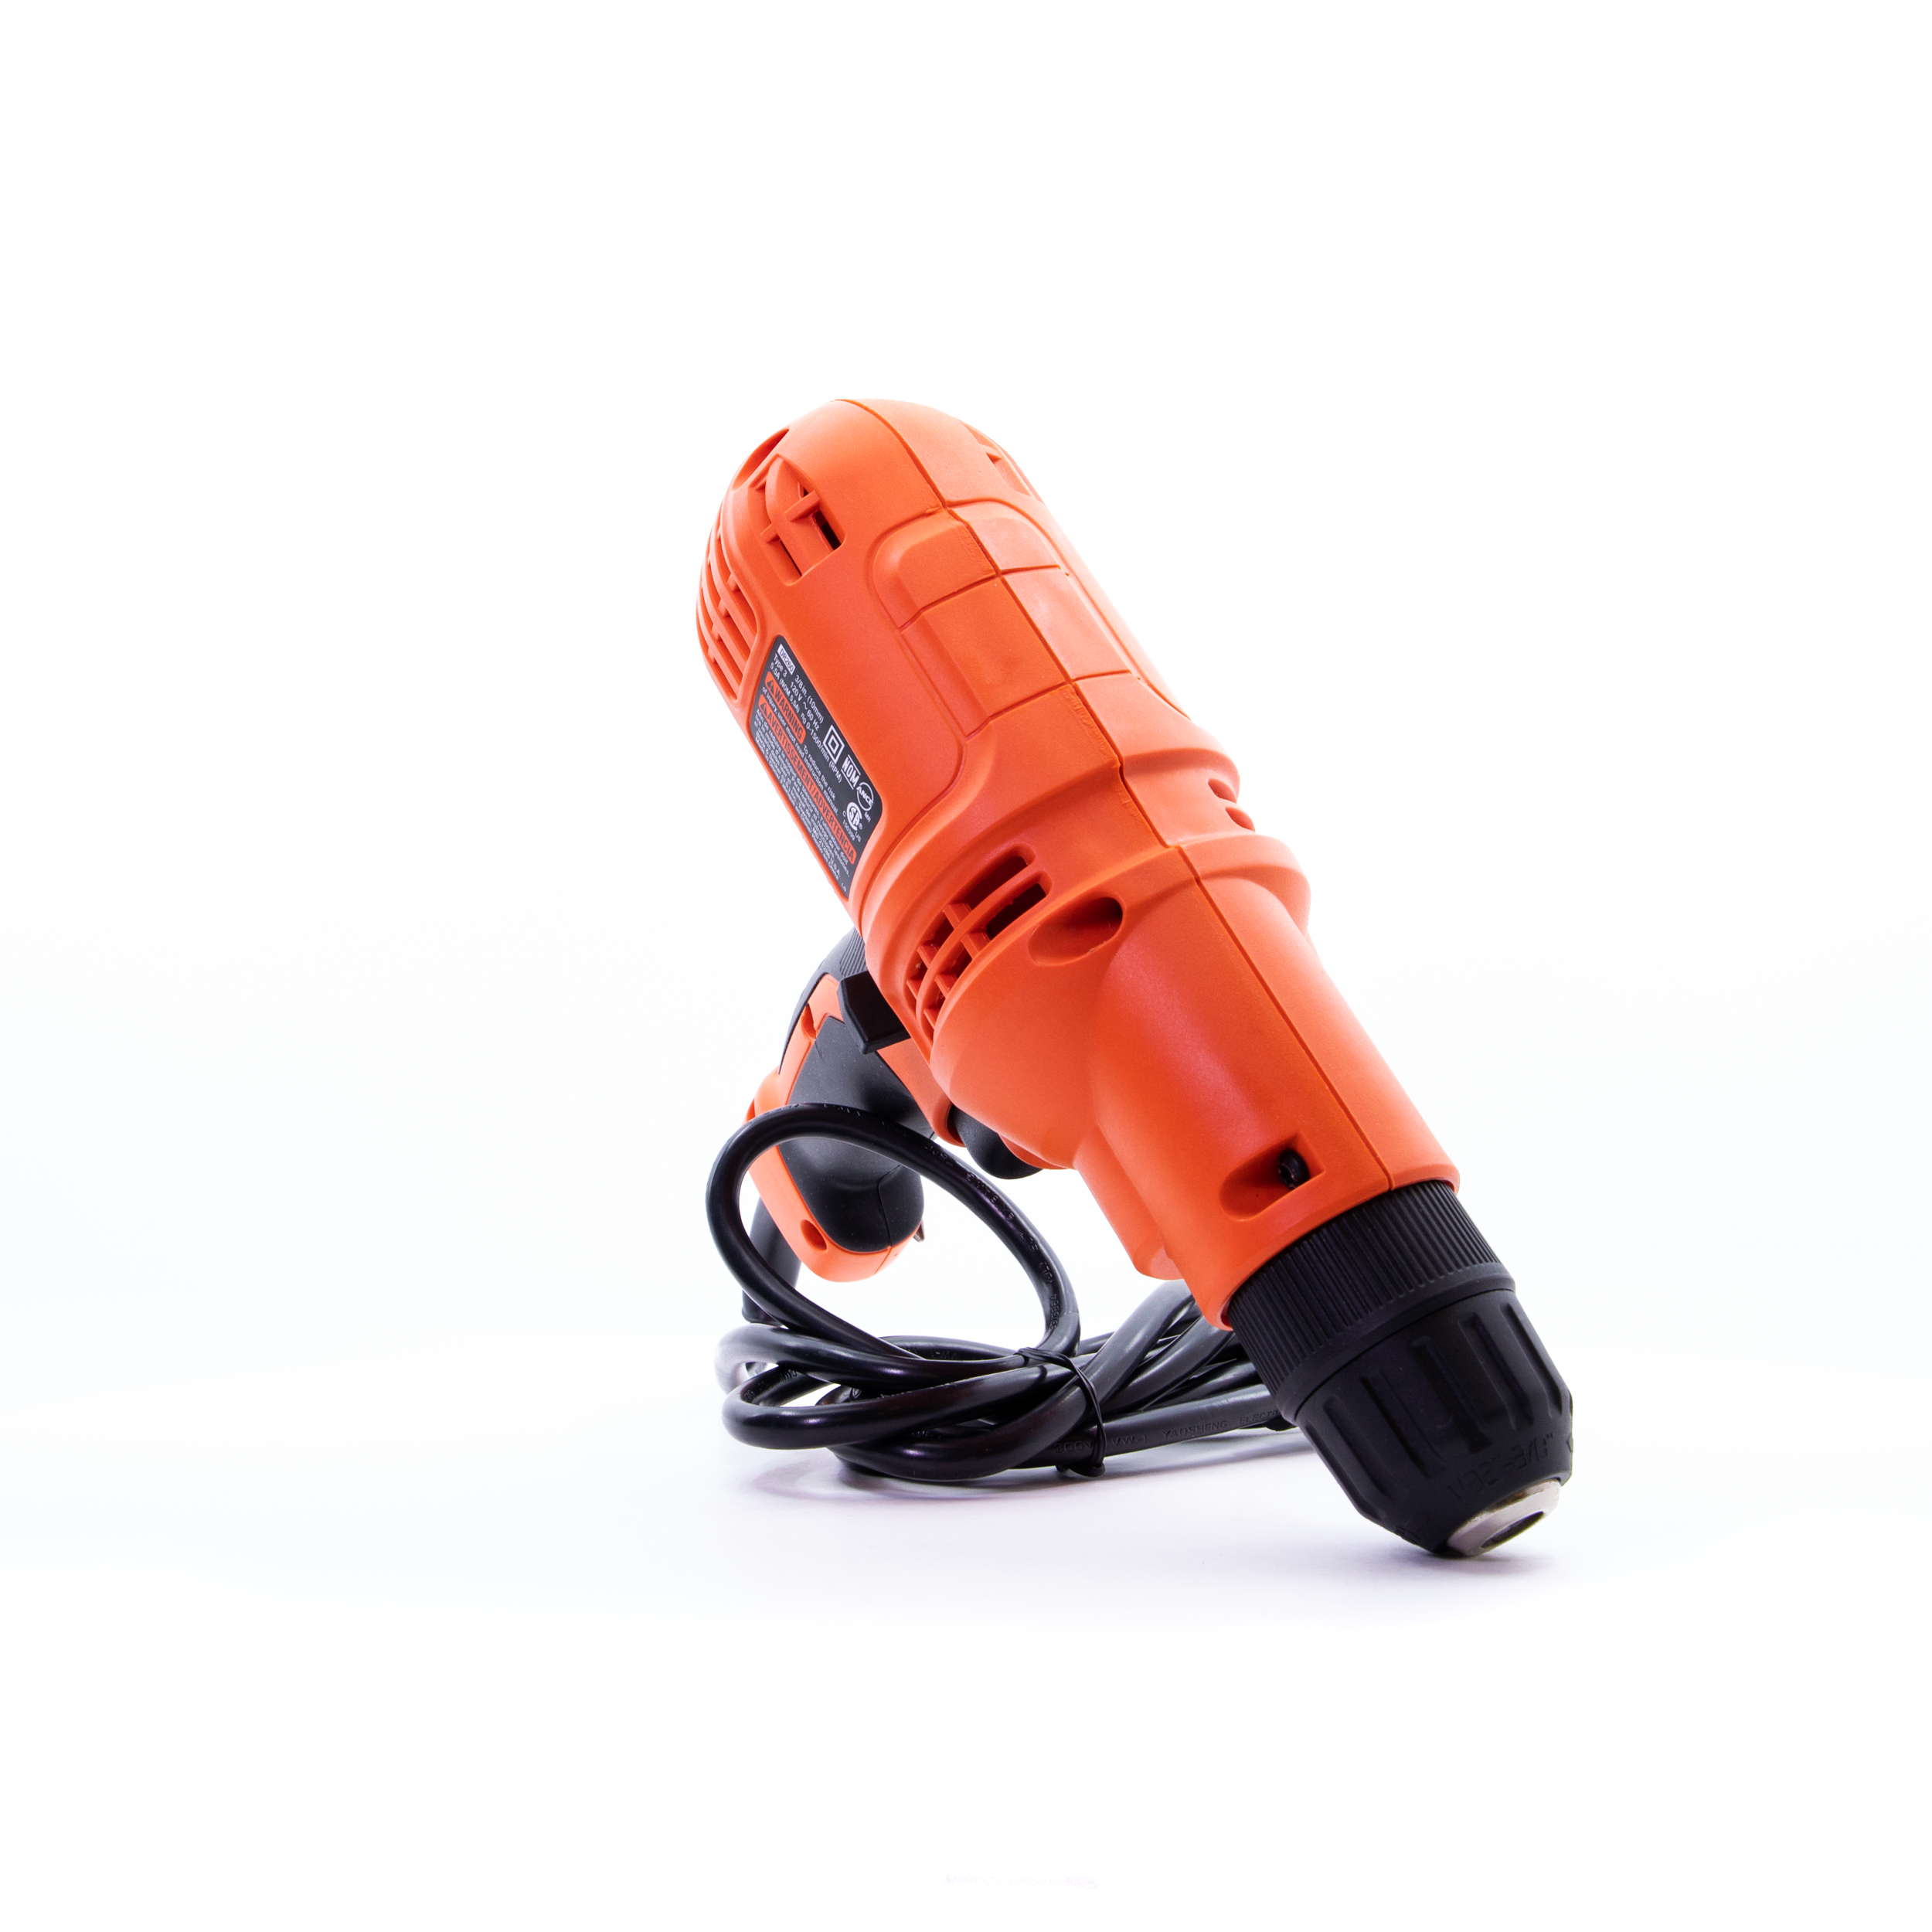 Black & Decker Power Tools 7152 K 3/8 Corded Drill 